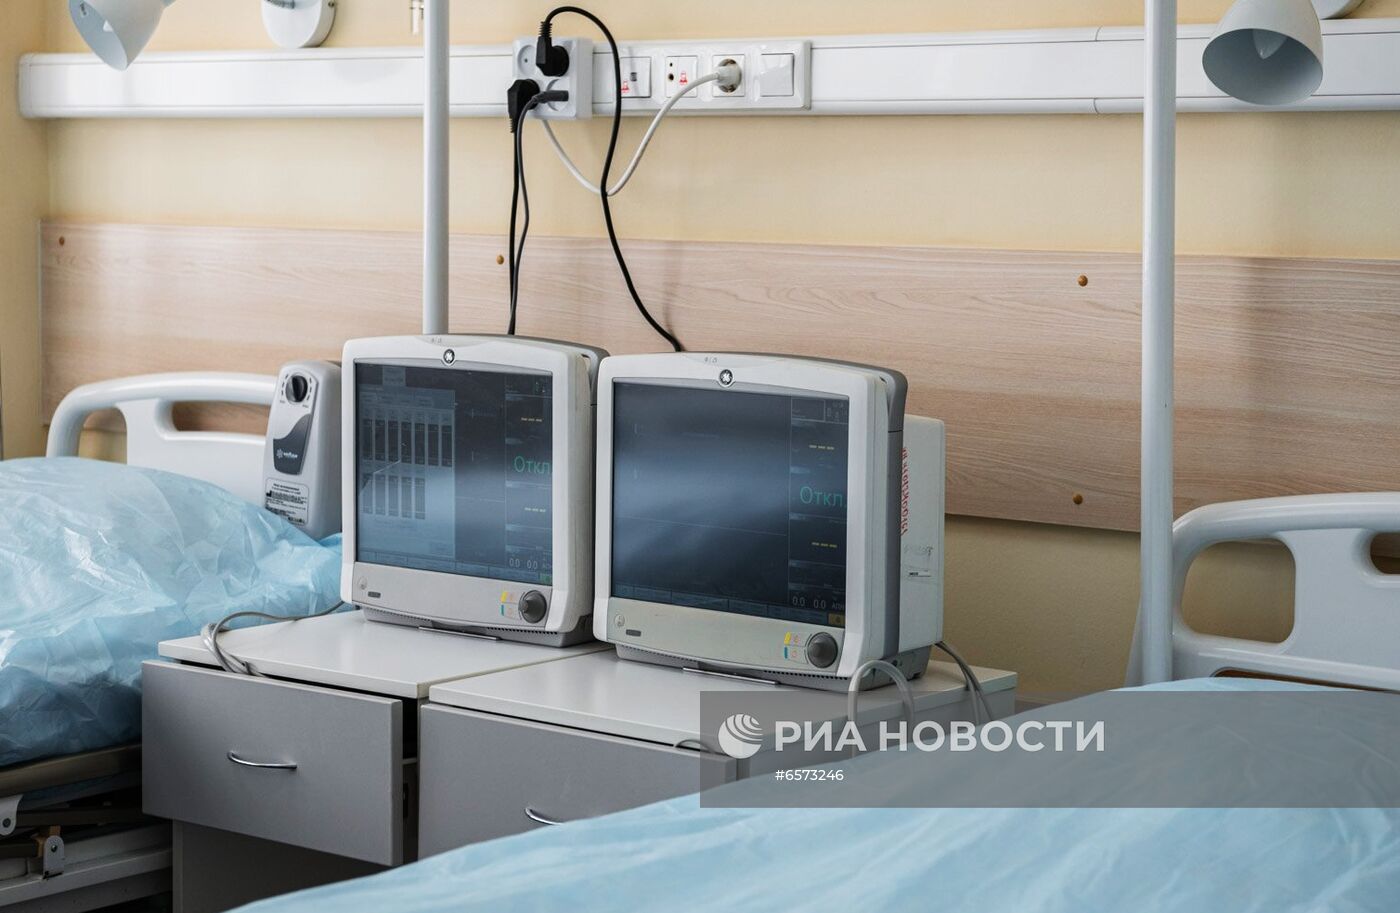 Открытие стационара для пациентов с COVID-19 в ГКБ No 15 им. Филатова